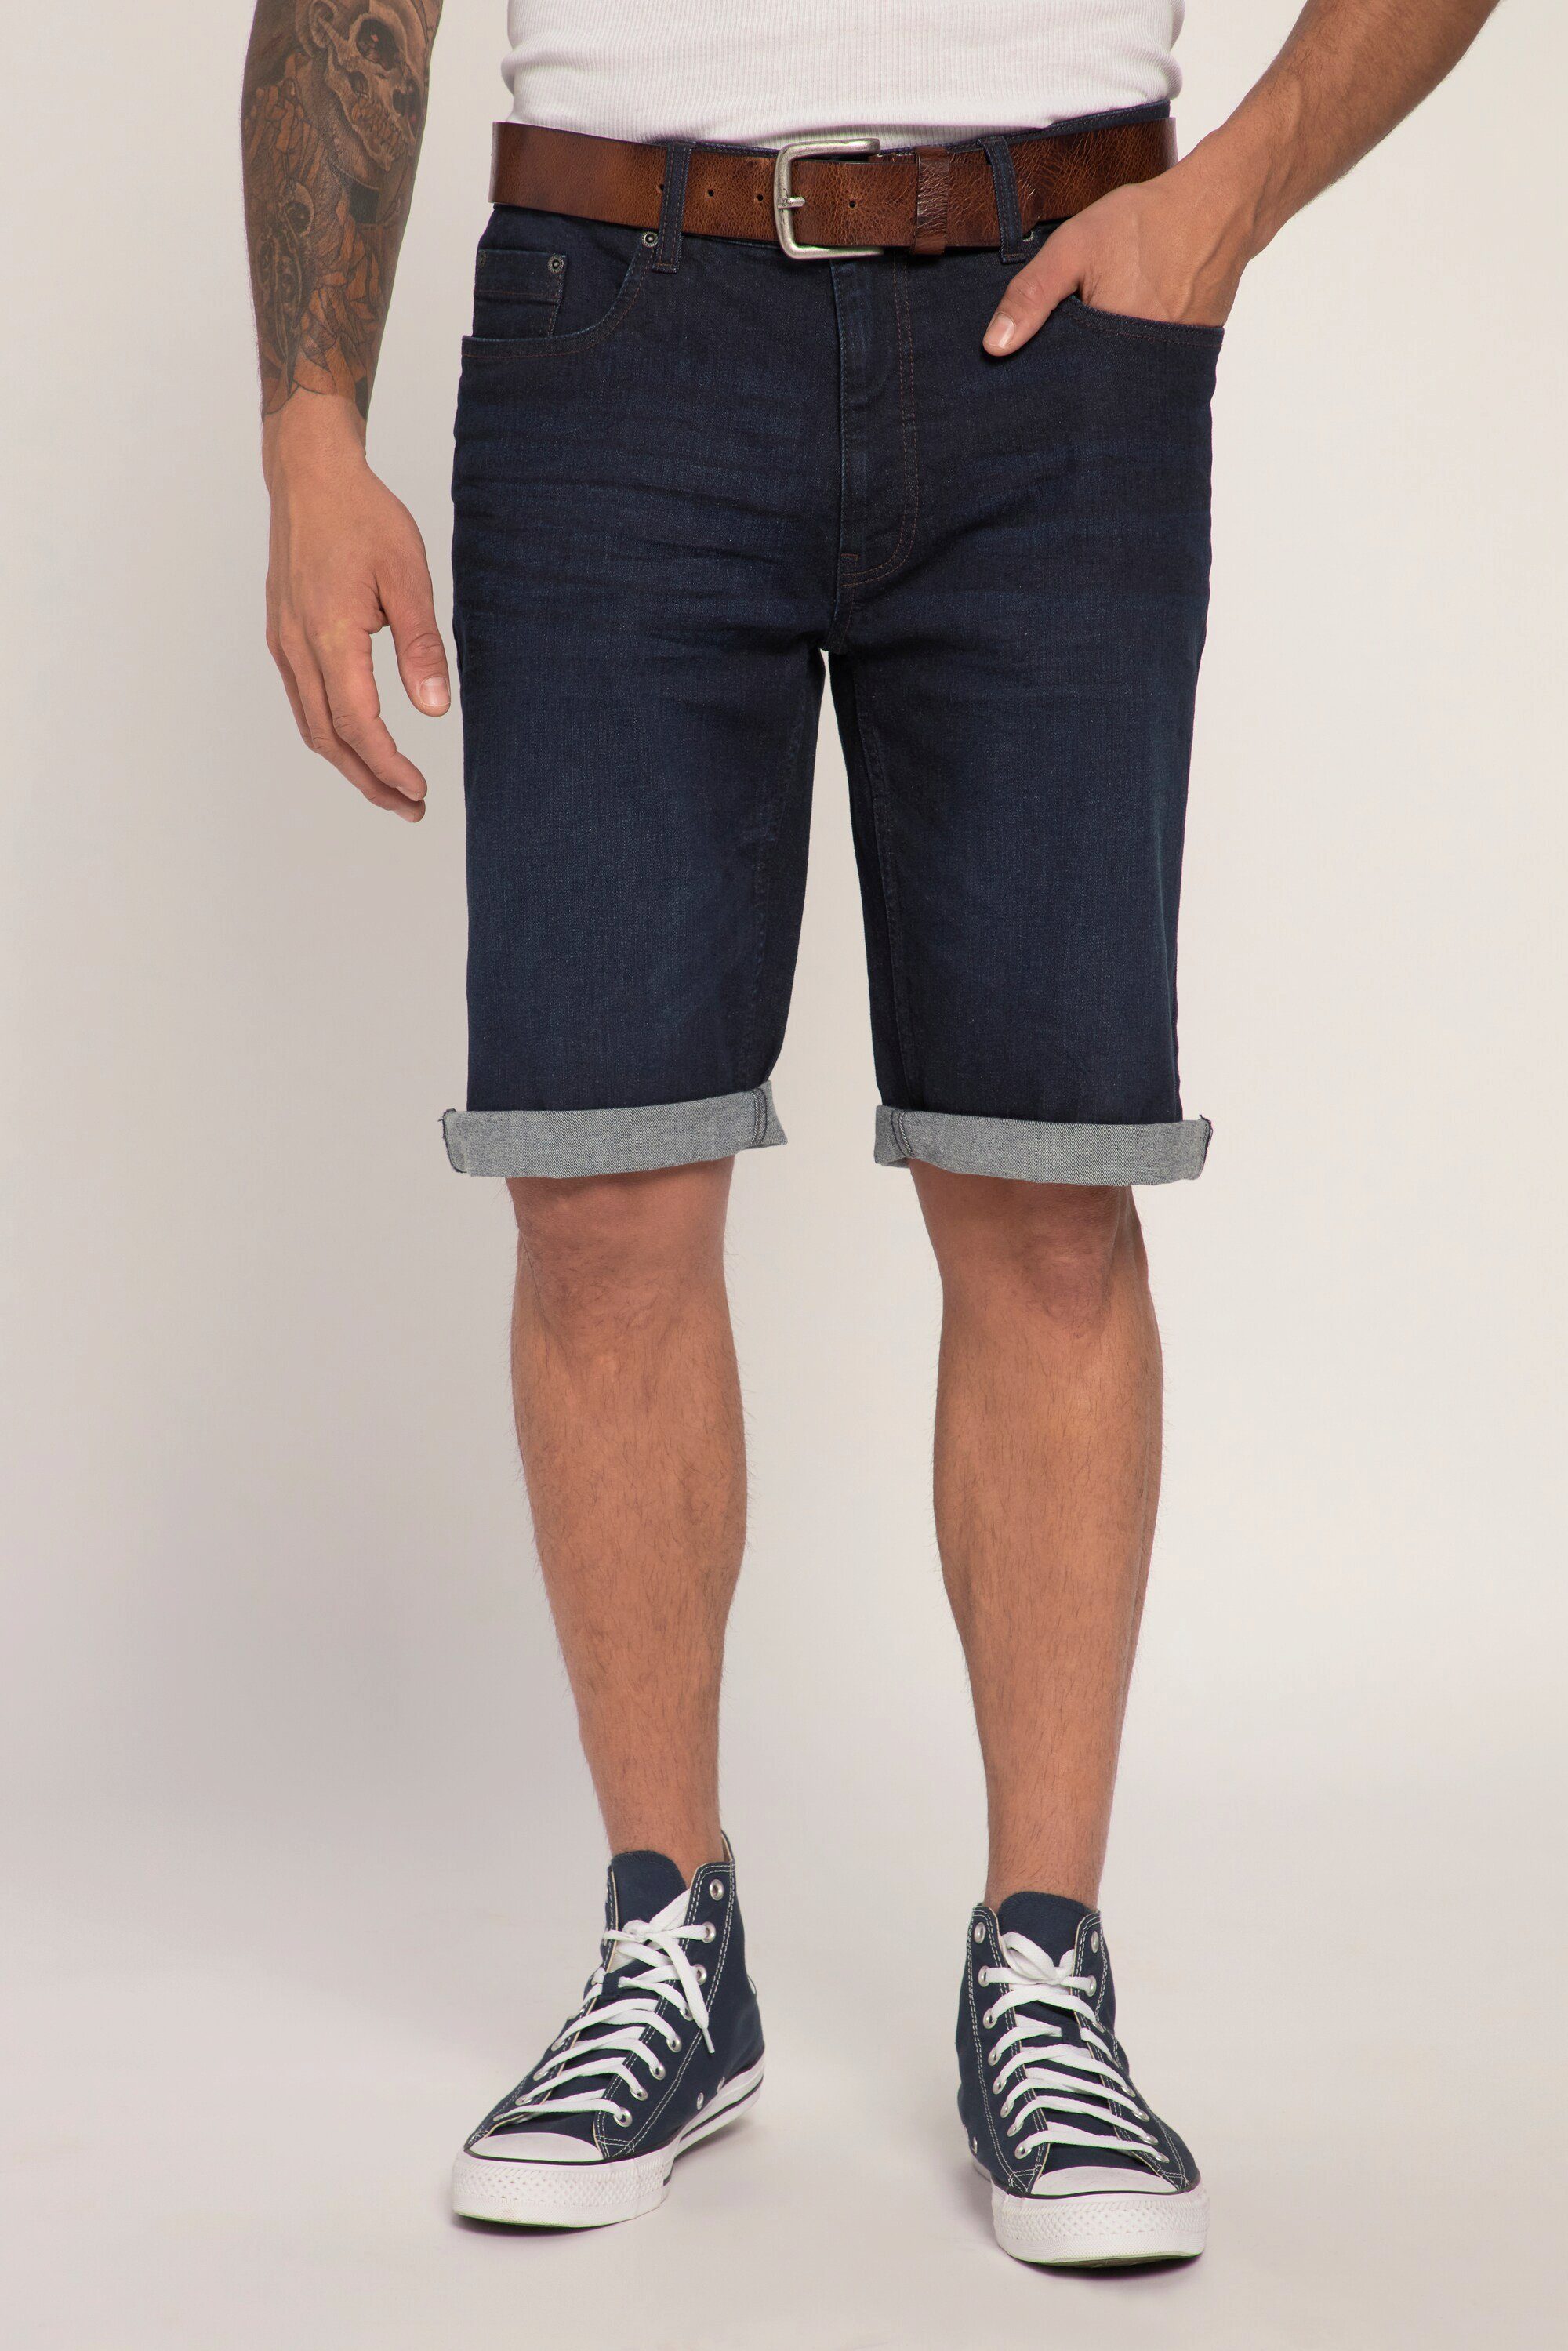 JP1880 Jeansbermudas Bermuda Bauchfit Jeans 5-Pocket High-Stretch dark blue denim